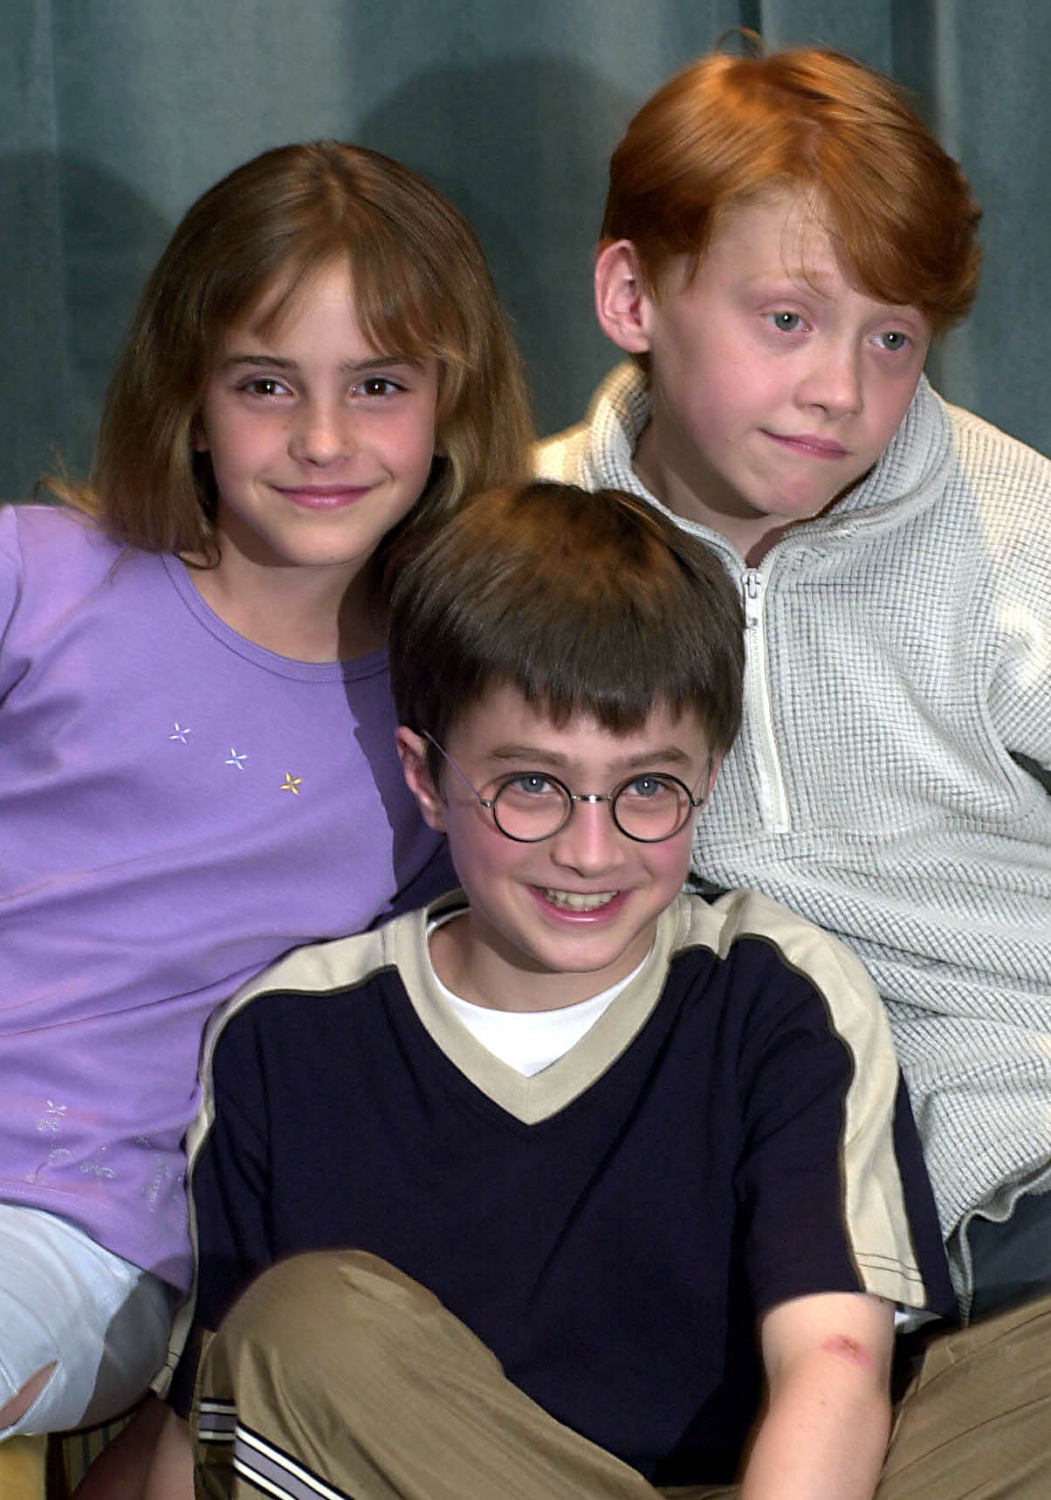 Januárban jön a Harry Potter-reunion